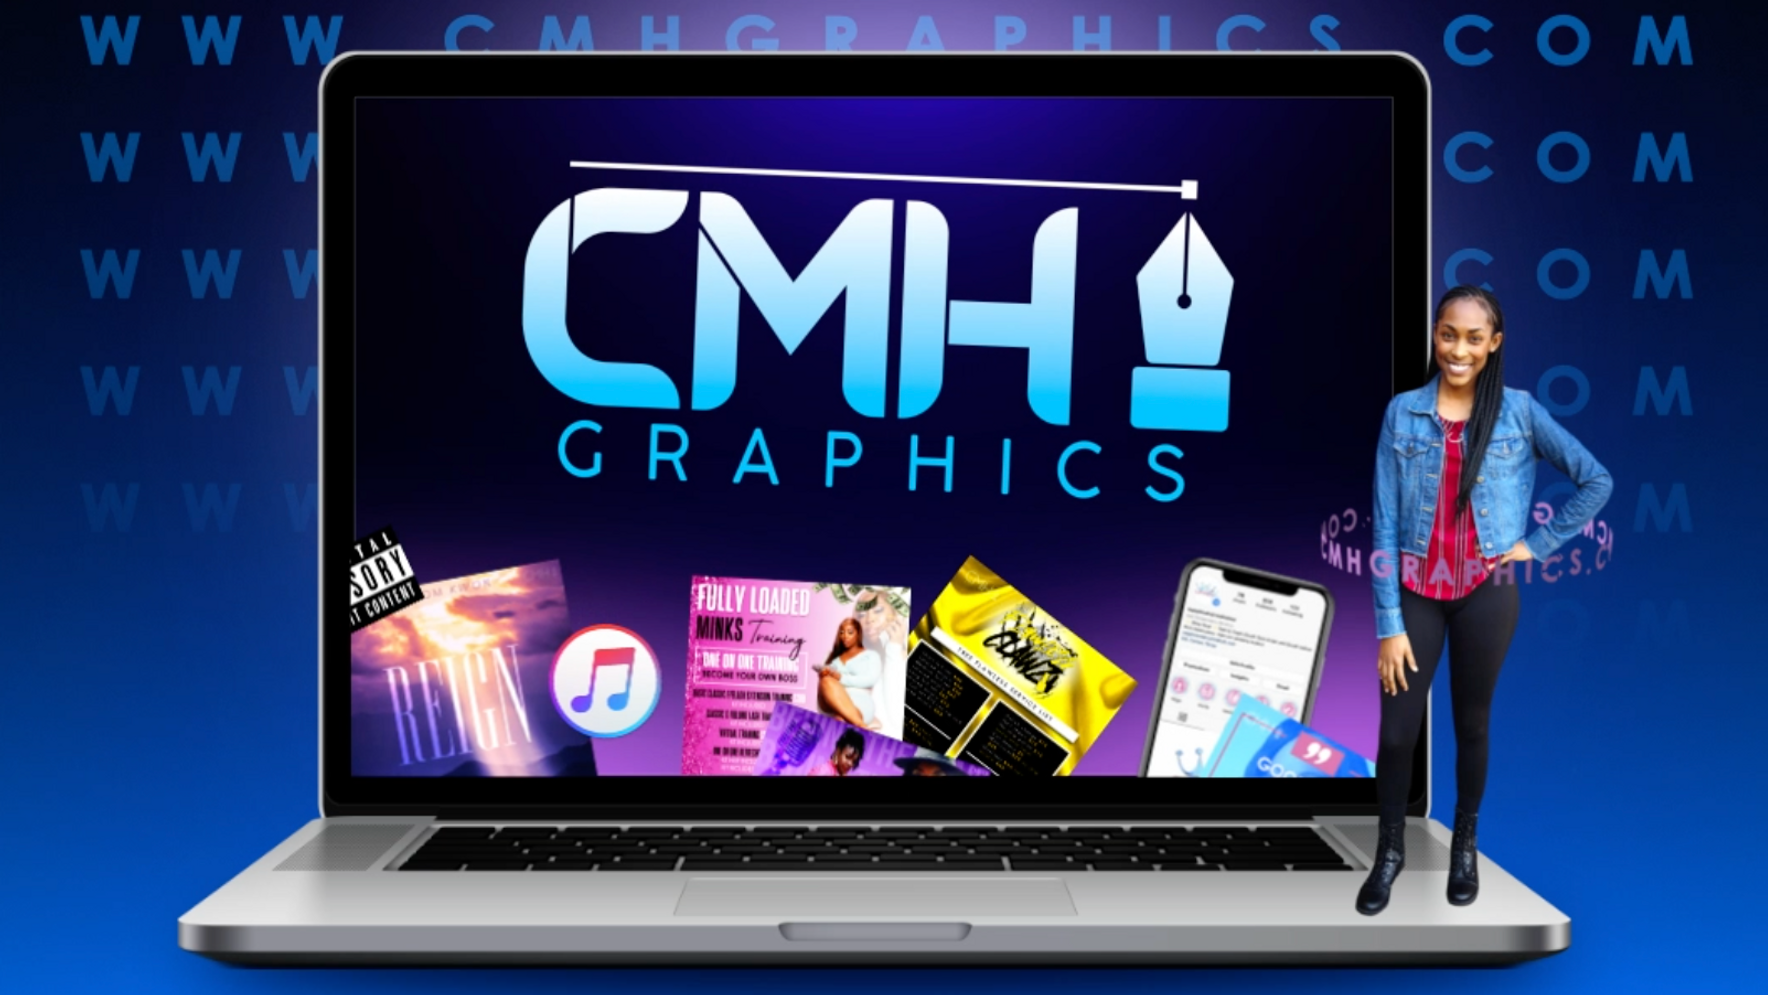 CMH Graphics